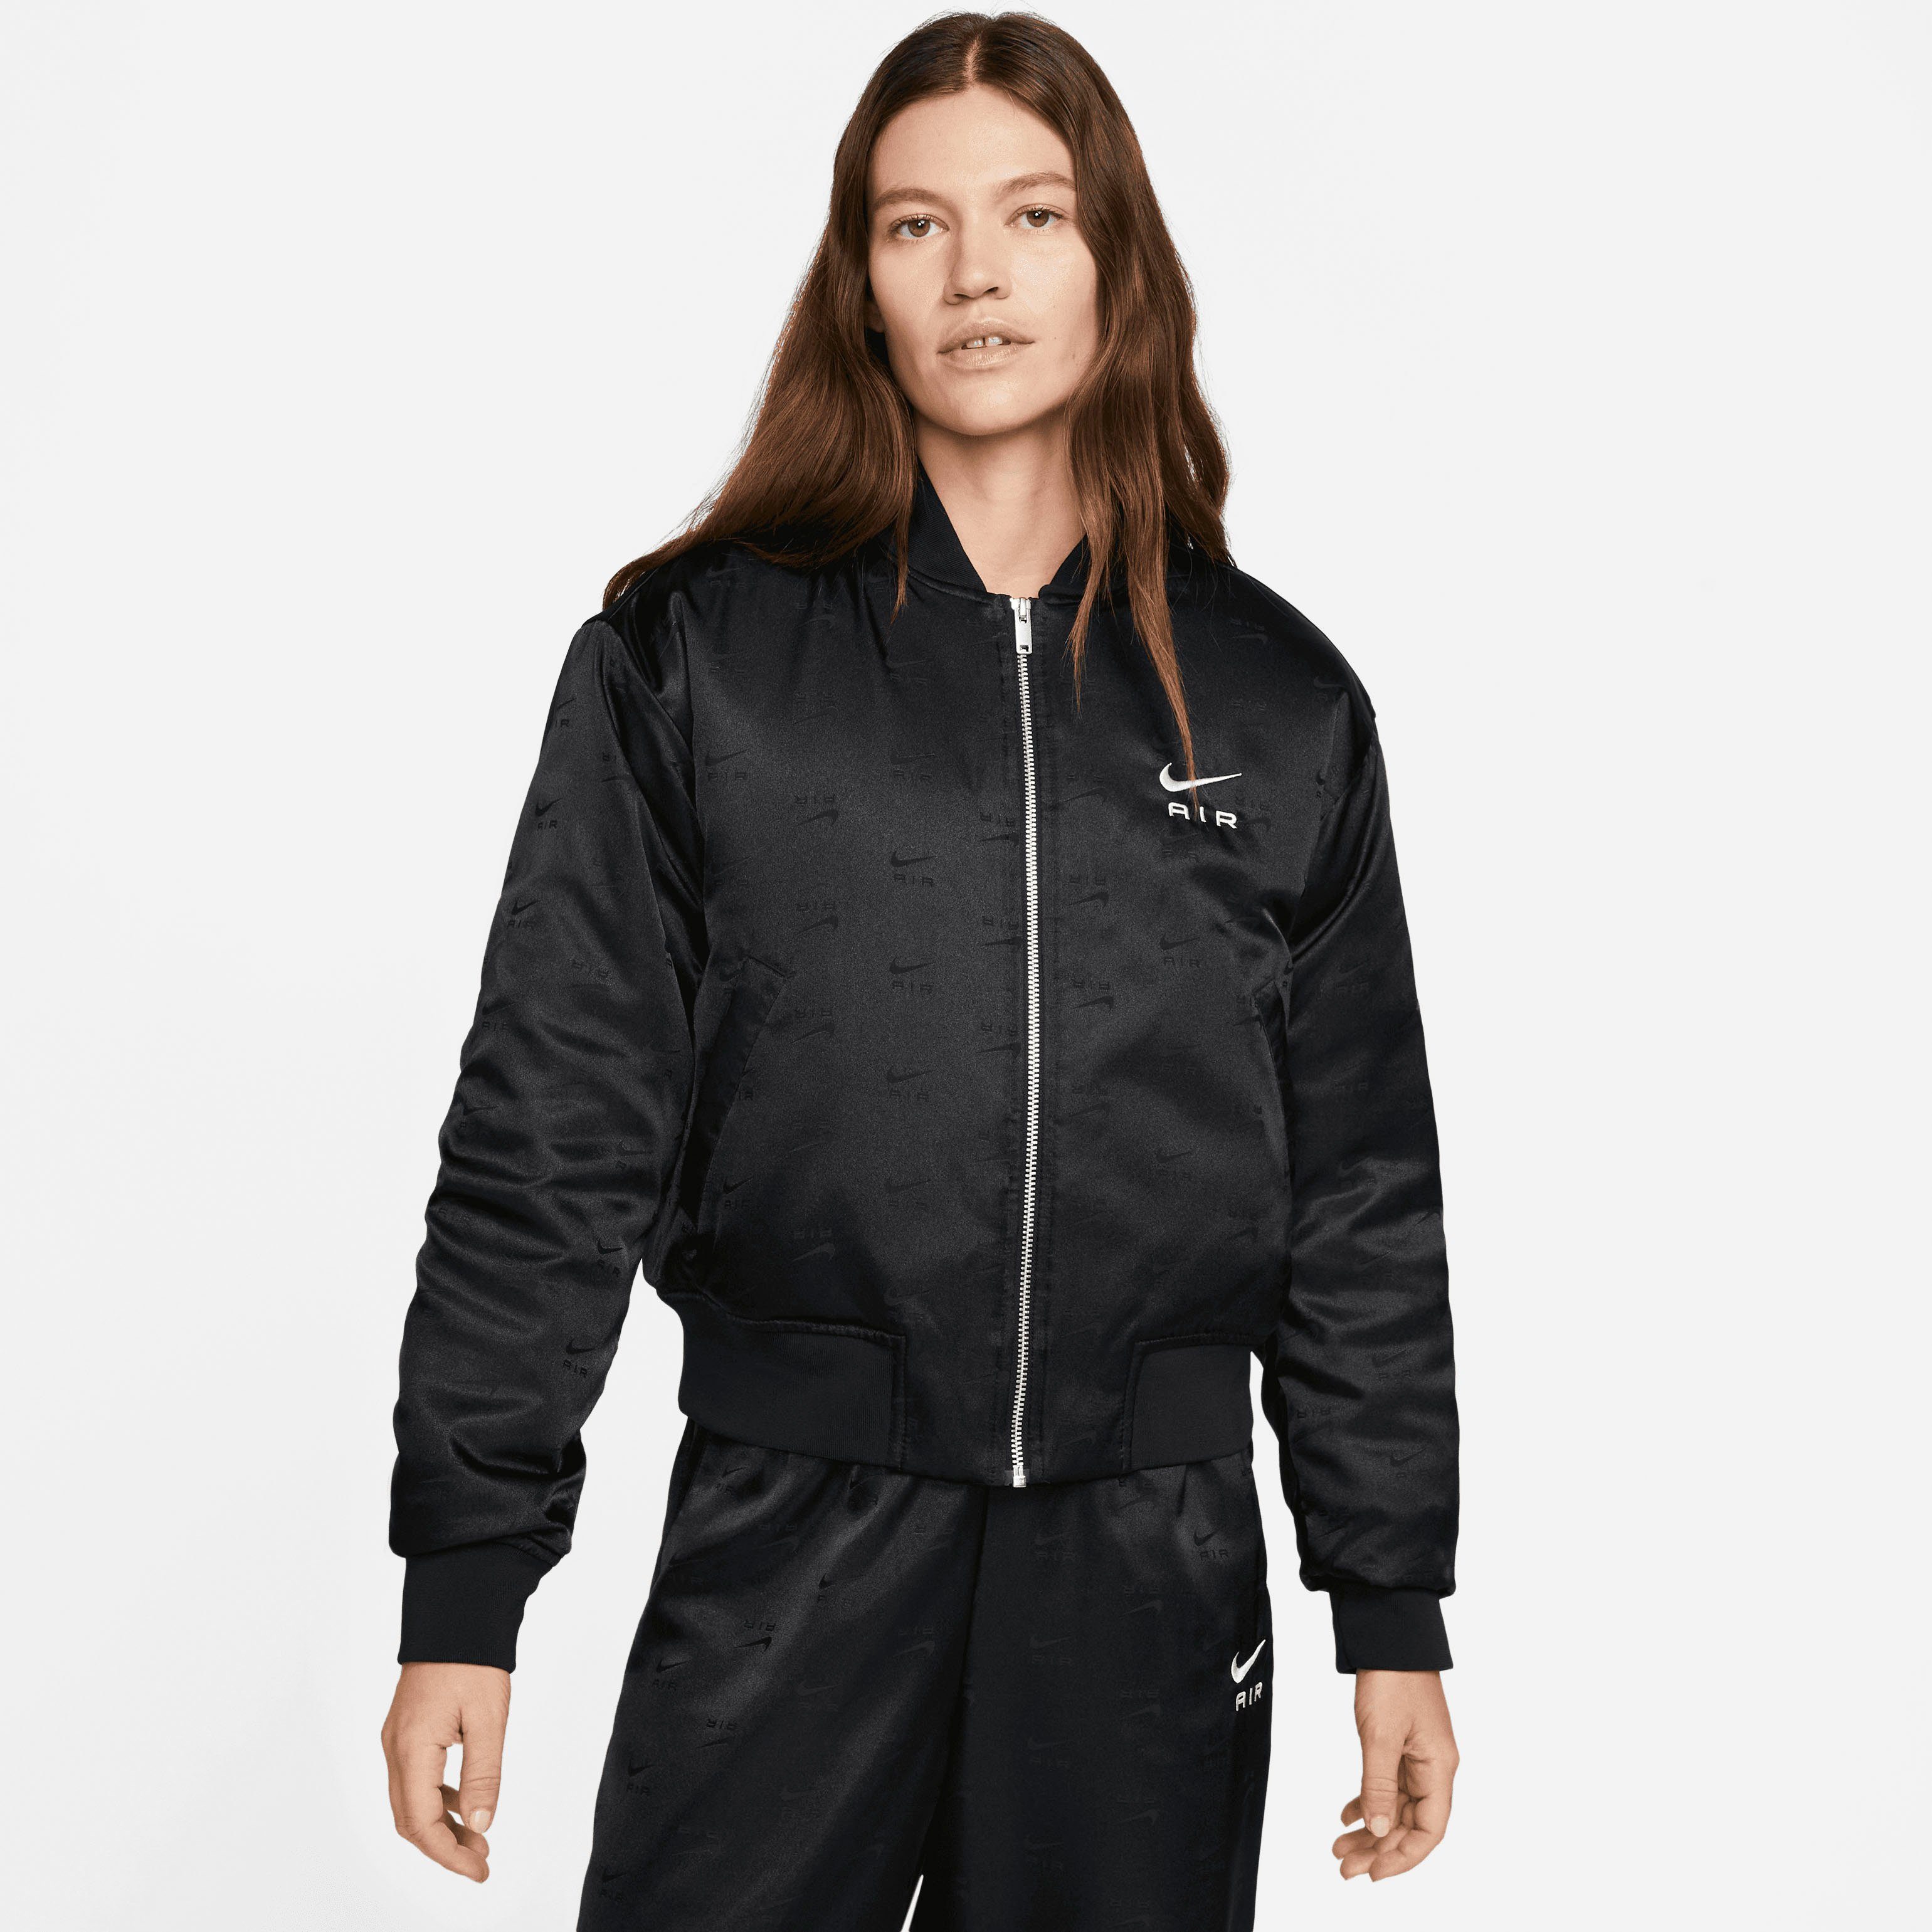 [Kostenloser Versand landesweit] Sportswear Blouson Nike Women's Bomber Air Jacket